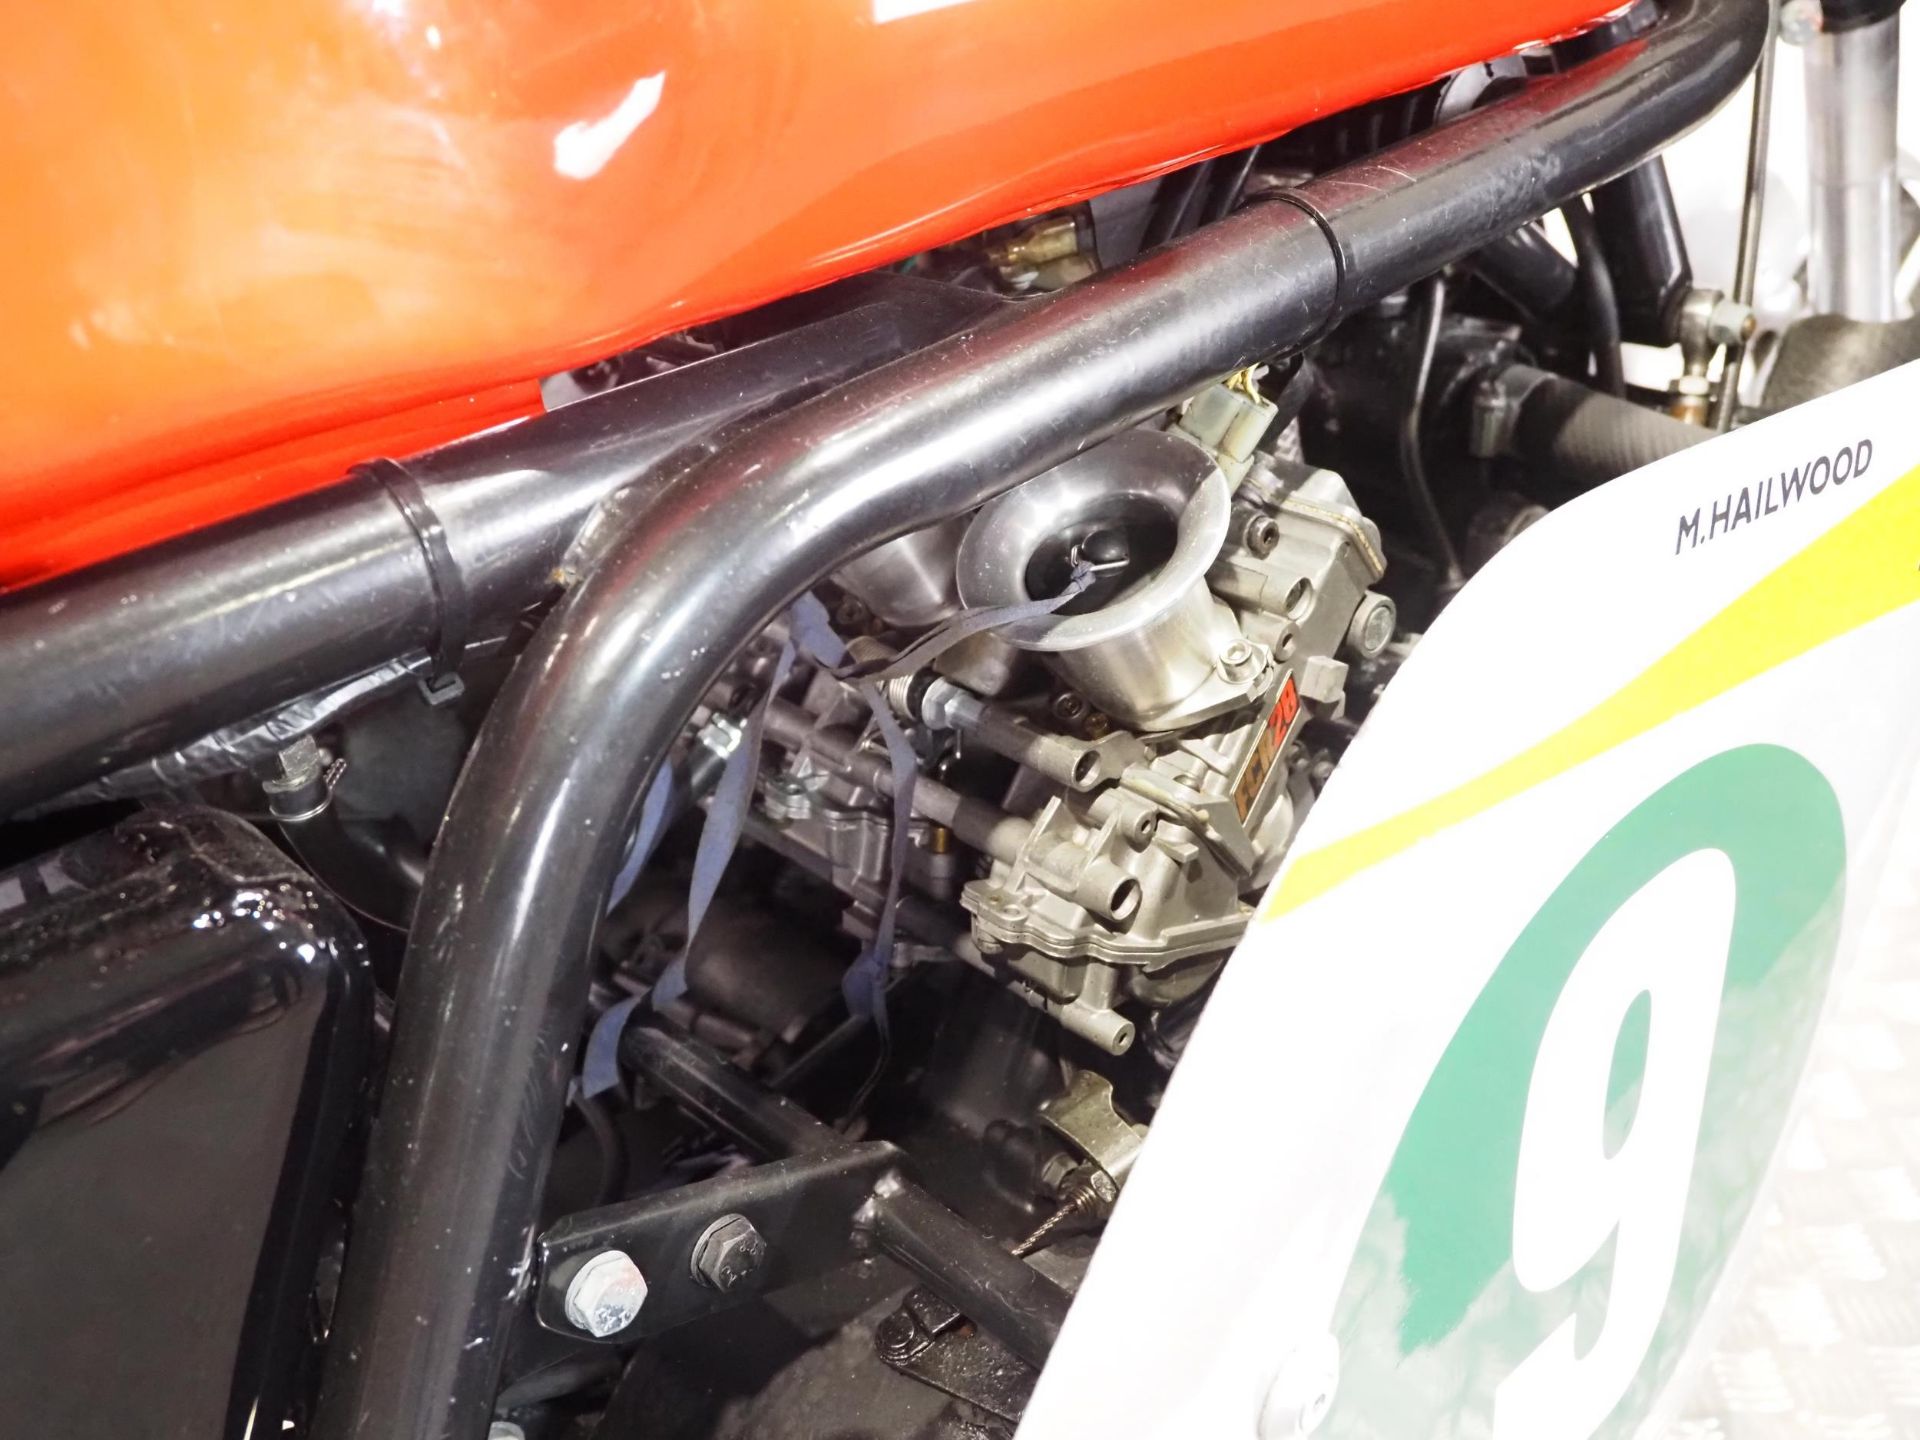 Honda RC161 Mike Hailwood replica. Engine No. MC14E-1029002 Runs but hasn't been ridden for some - Image 9 of 11